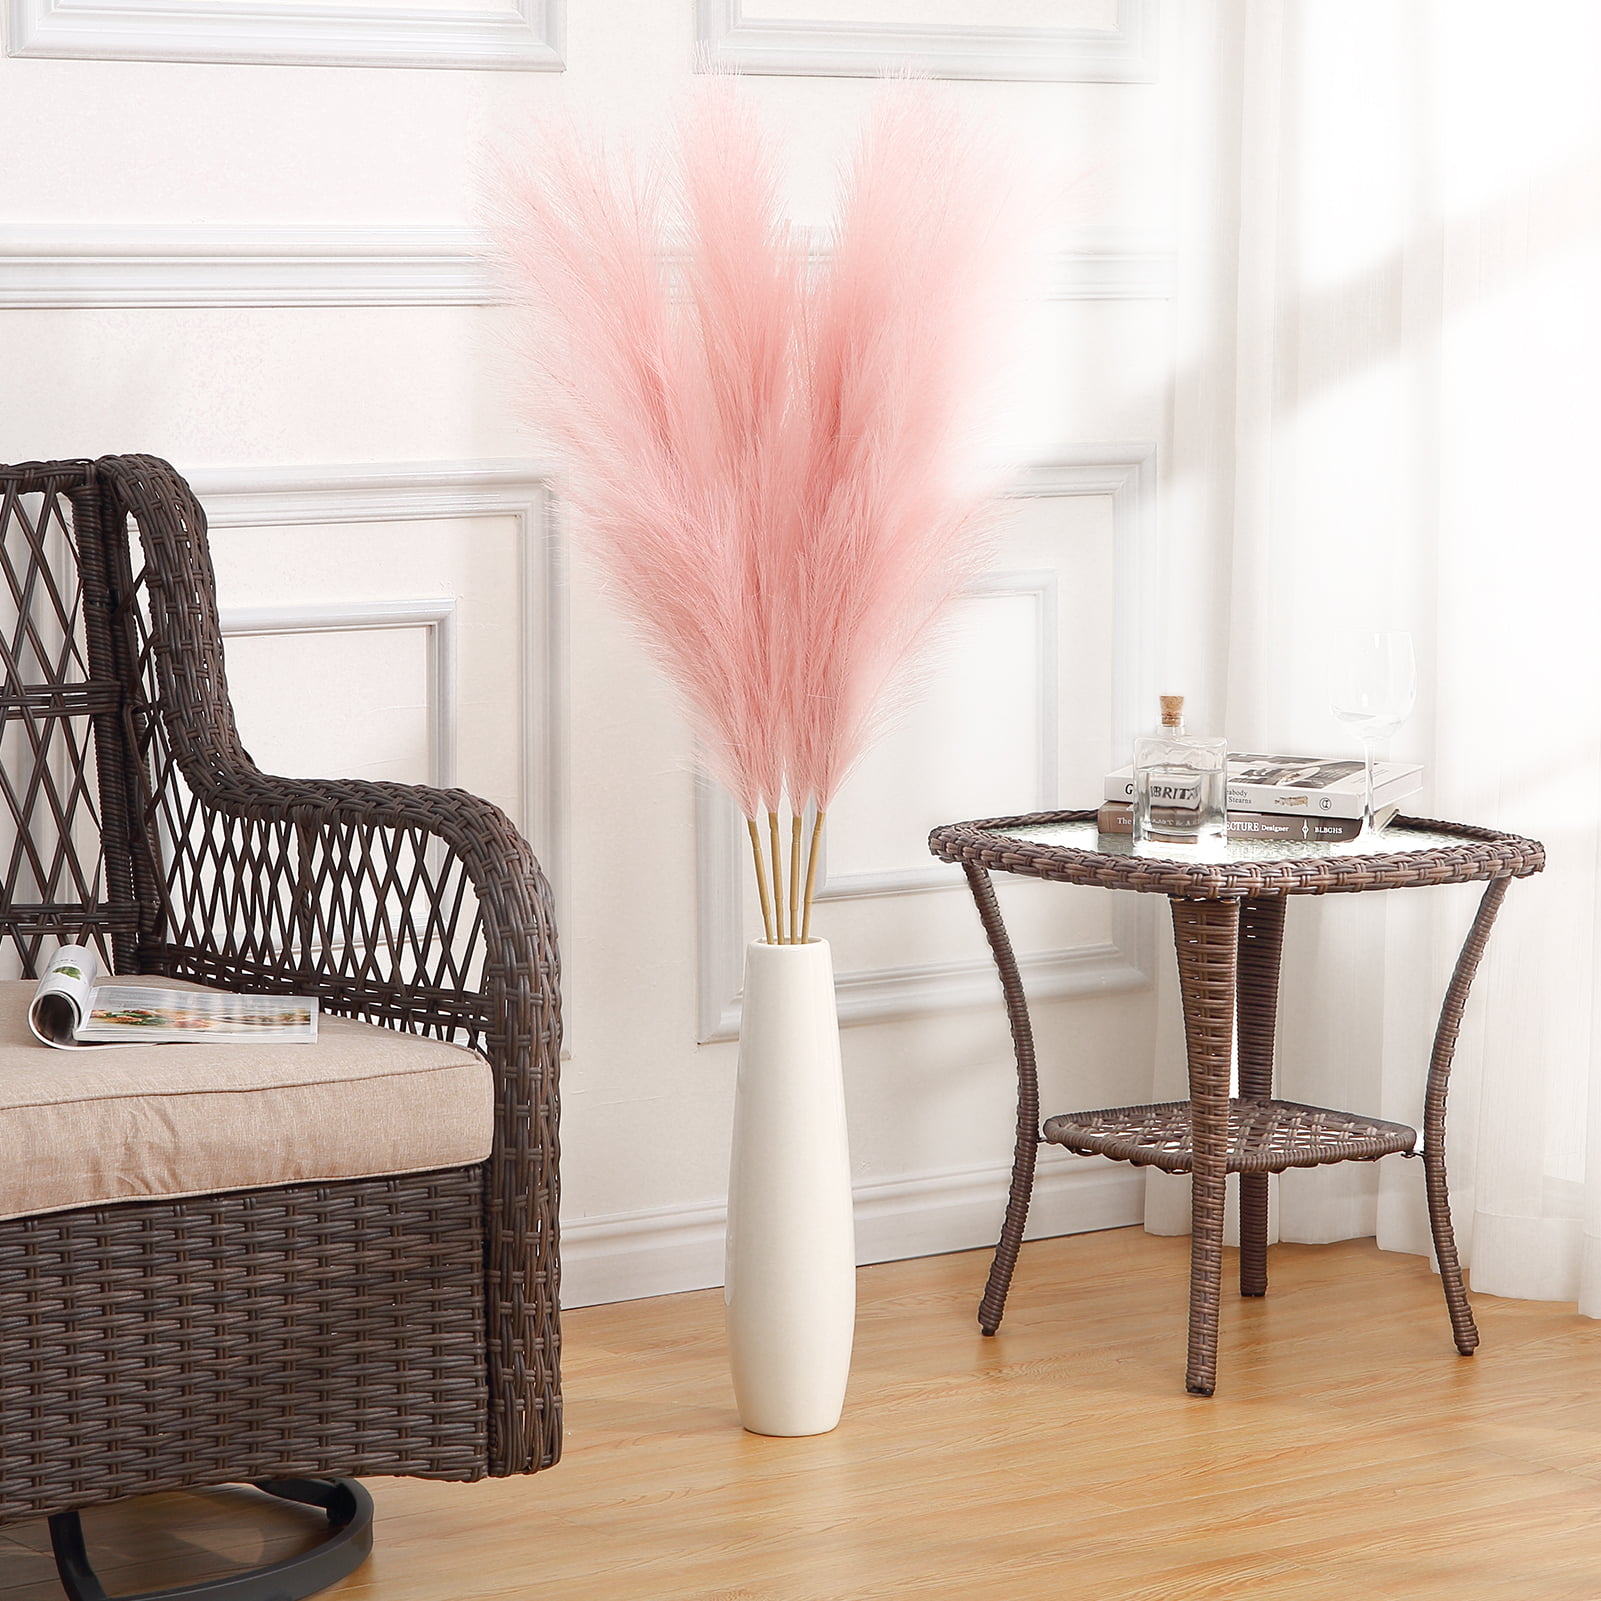 LUNAMA HOME DÉCOR® 6 PCS Pink Pampas Grass Decor 43” Tall - Artificial  Pampas Grass Decor - Floor Vase Filler Feathers Decor for Living Room,  Kitchen